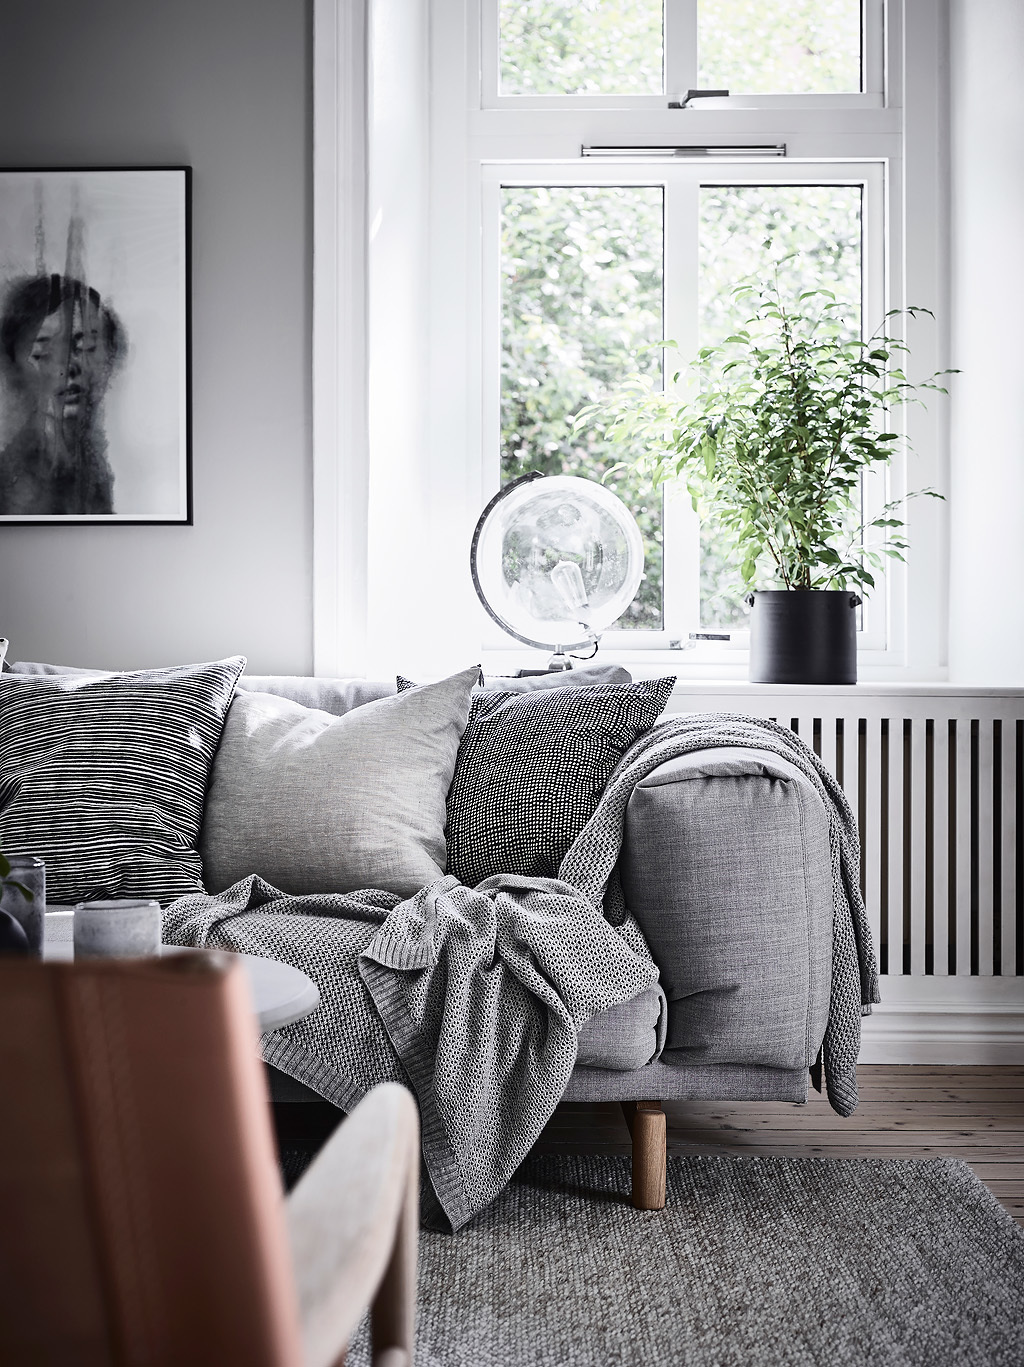 delikatissen textiles suaves textiles hogar sofá gris estilo nórdico decoración relajante decoración interiores cojines mantas hogar accesorios decoración 